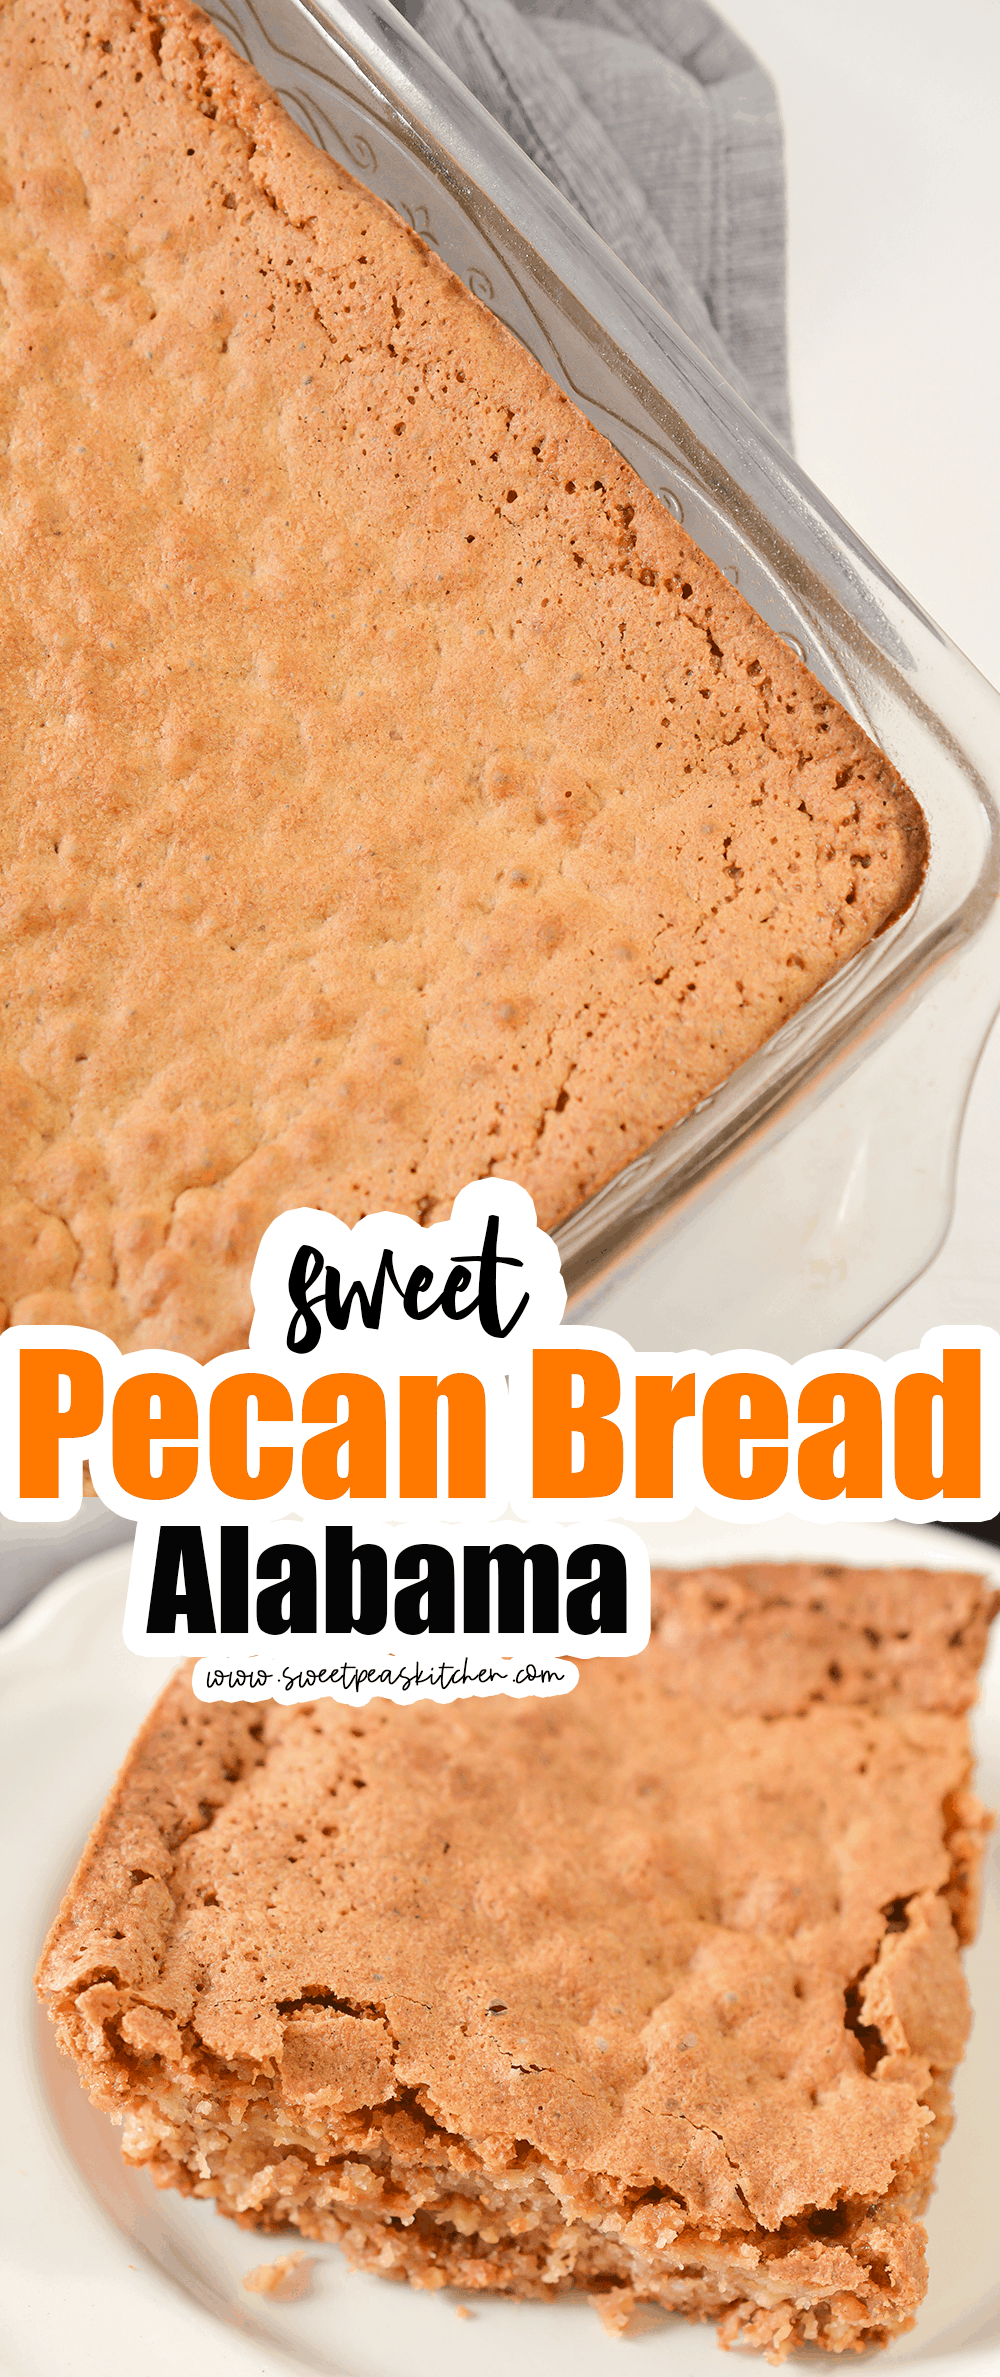 Sweet Alabama Pecan Bread on Pinterest